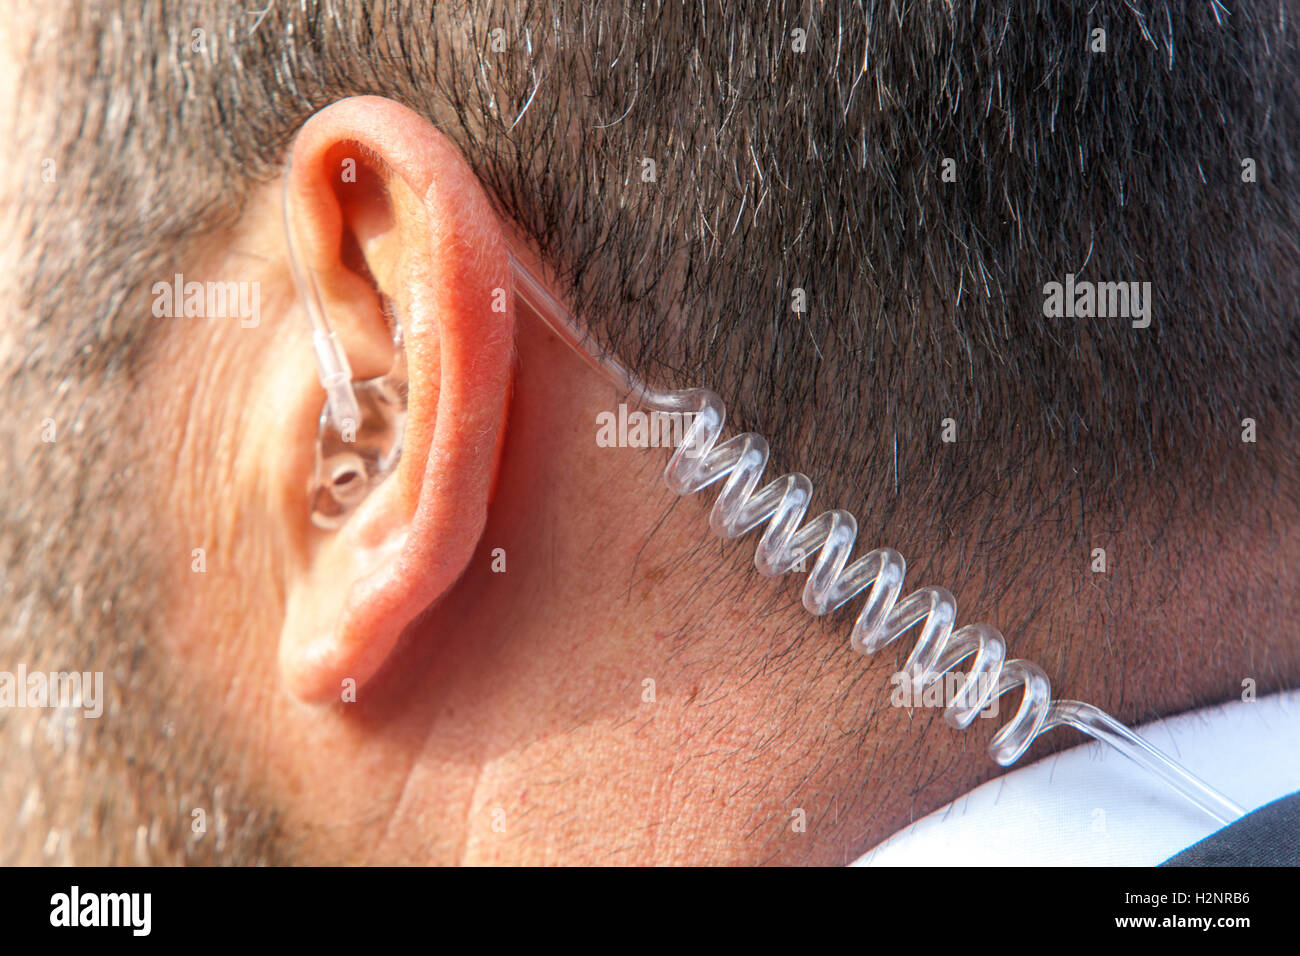 Bodyguard earpiece, detail ear, security agent Stock Photo